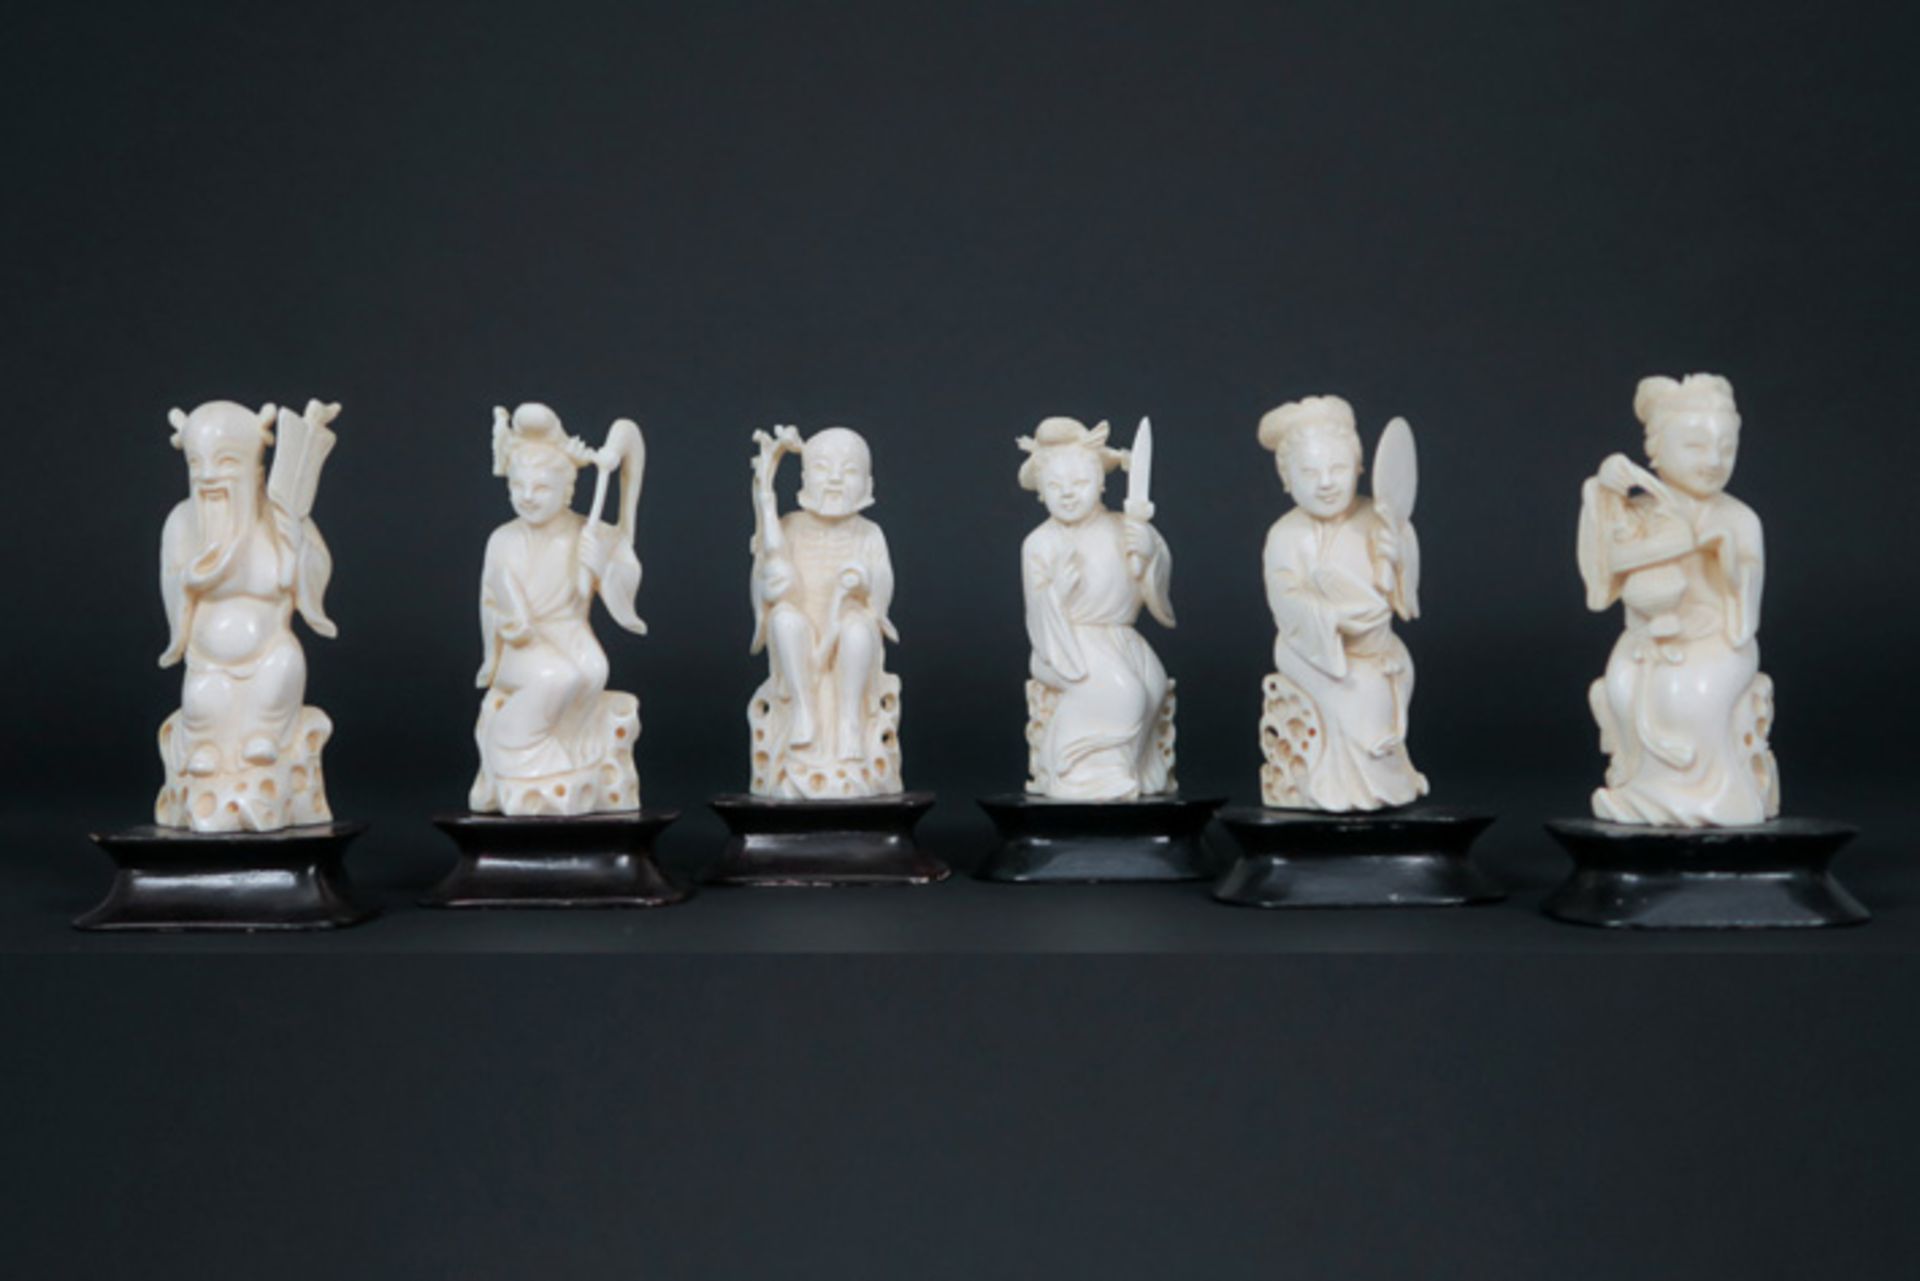 series of six old Chinese sculptures in ivory || Reeks van zes oude, kleine Chinese sculpturen in